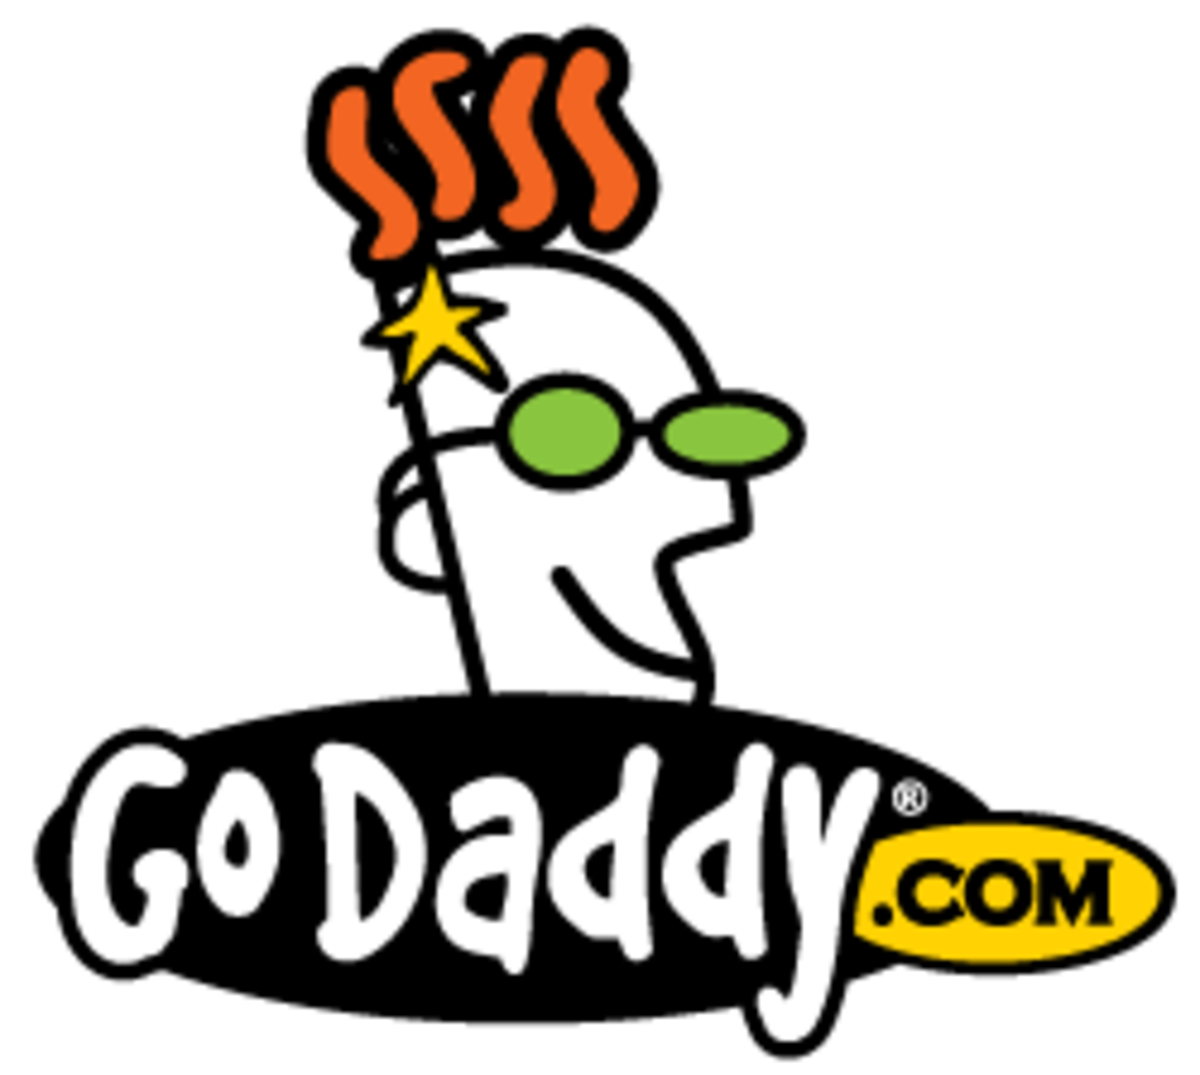 Top 8 Sites Like GoDaddy (GoDaddy Alternatives) For Hosting & Domain Registration